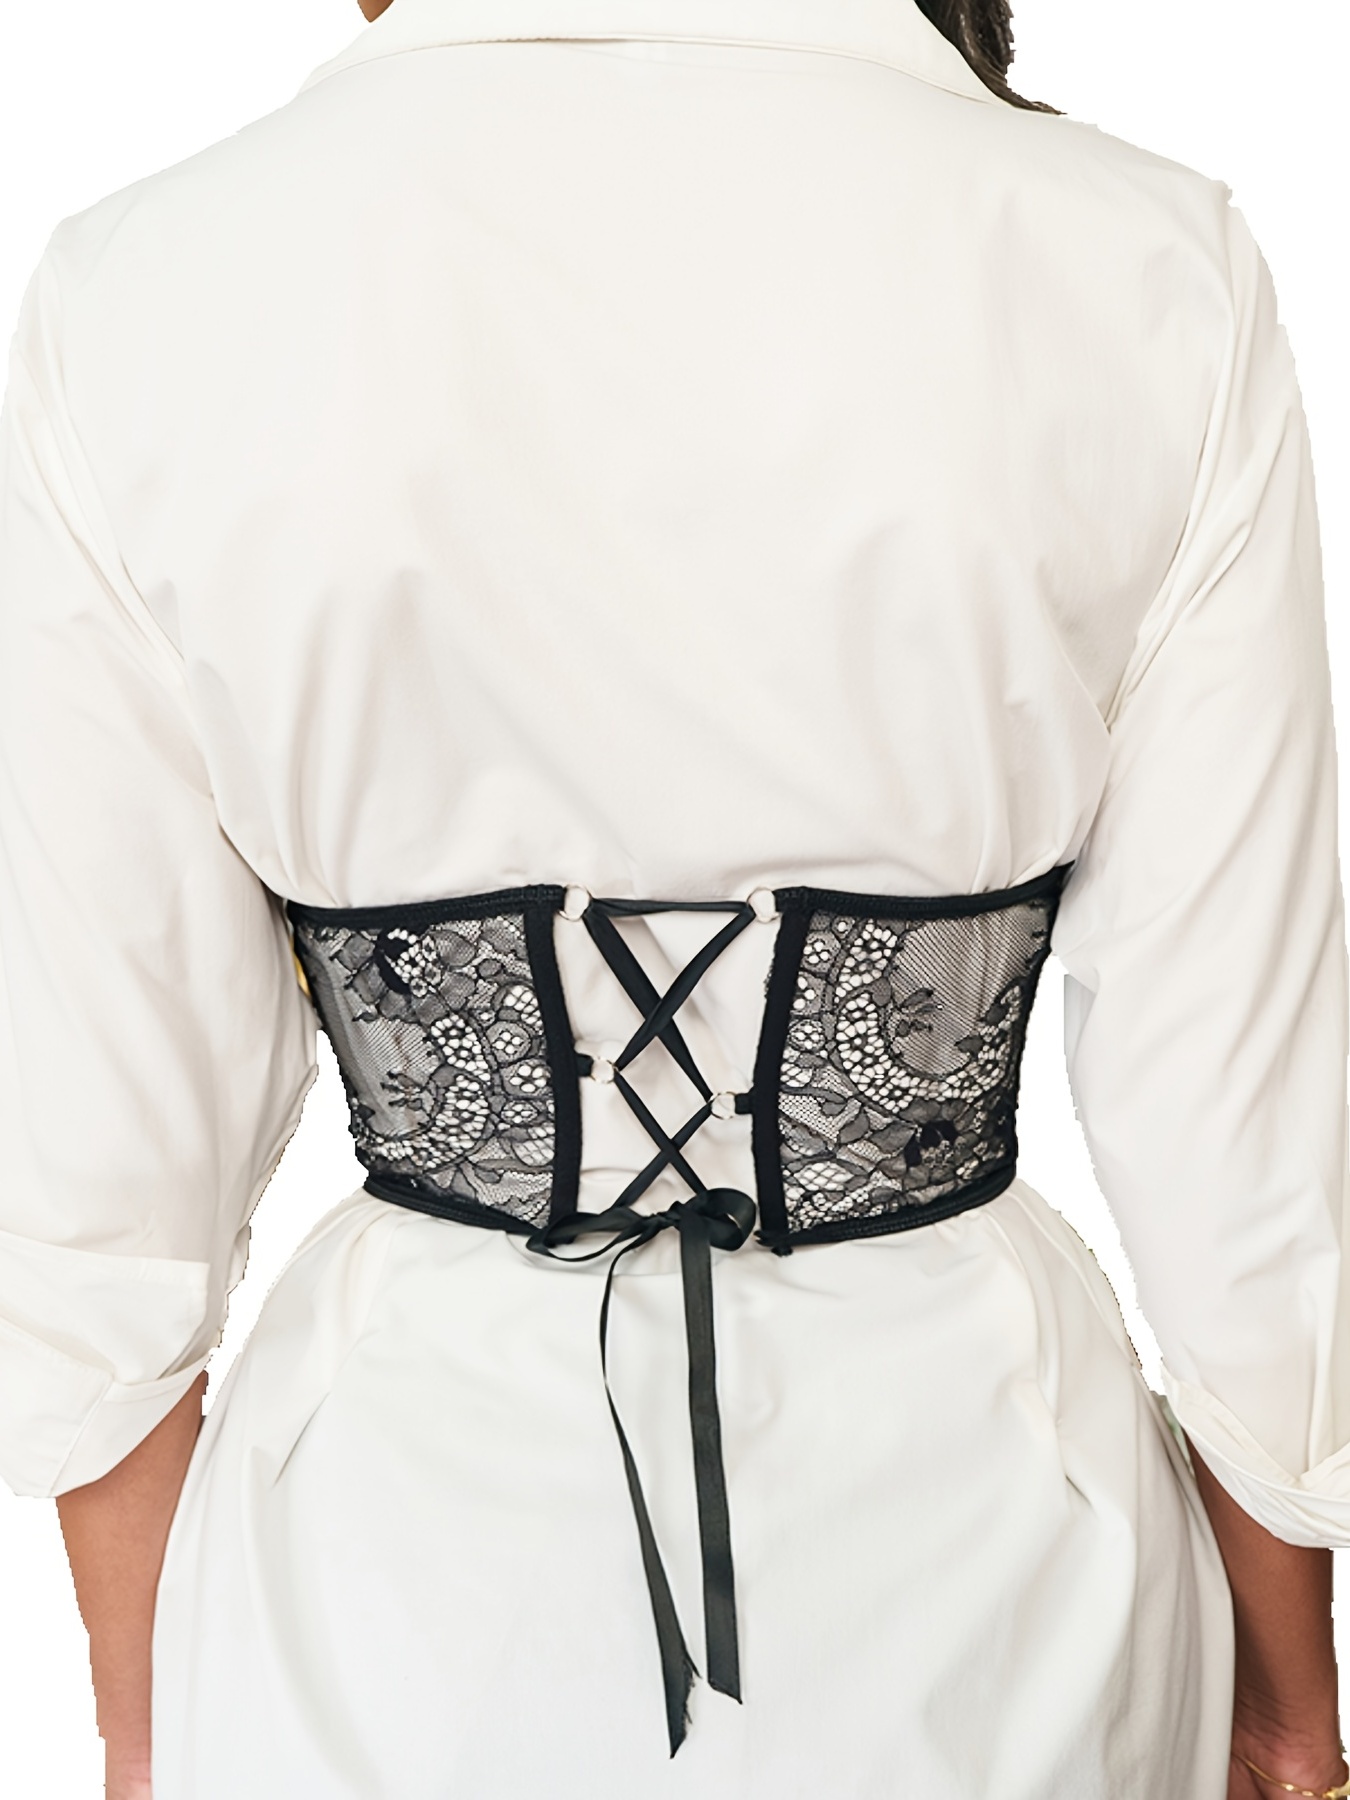 Women's Lace Up Corset Waist Belt Lace Embroidery Pearl Chain Underbust  Corset Top Body Shaper Bustier